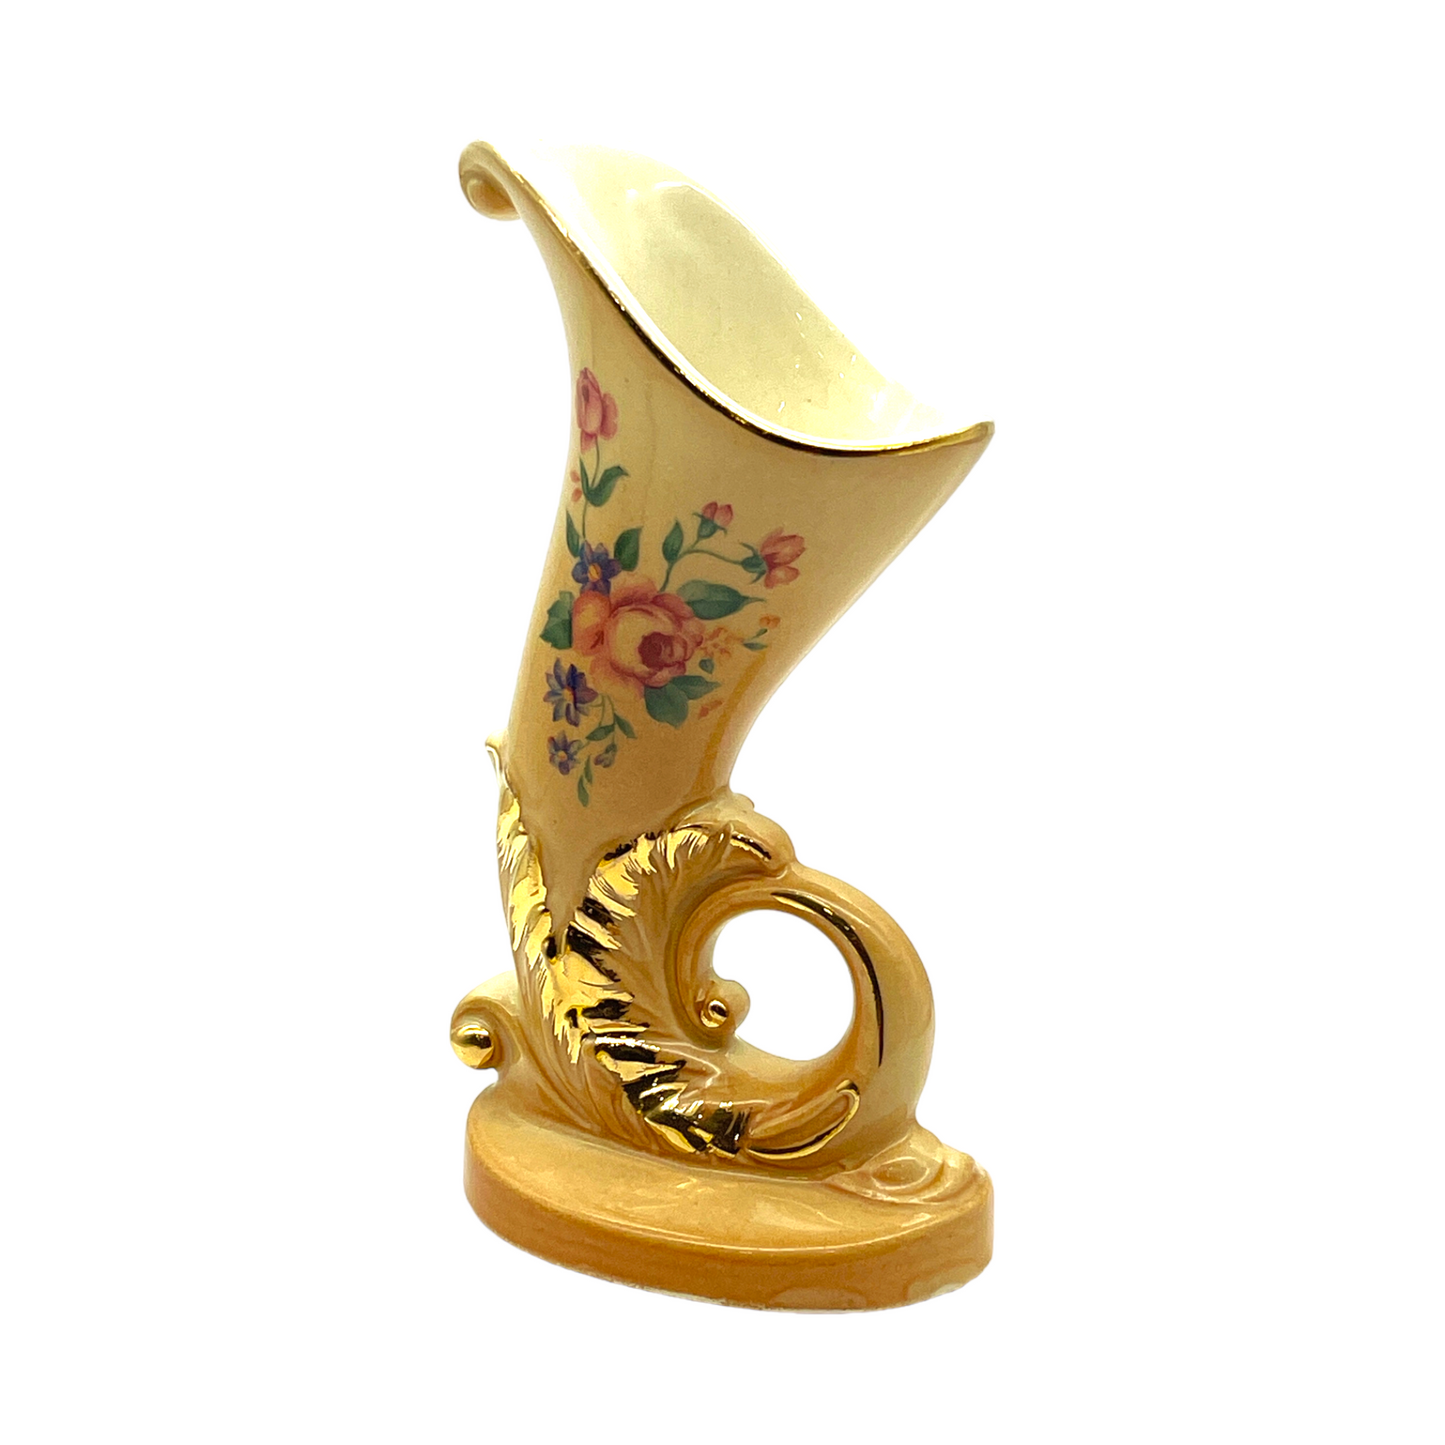 Spaulding China - Small Cornucopia Vase - Vintage - 6.75"